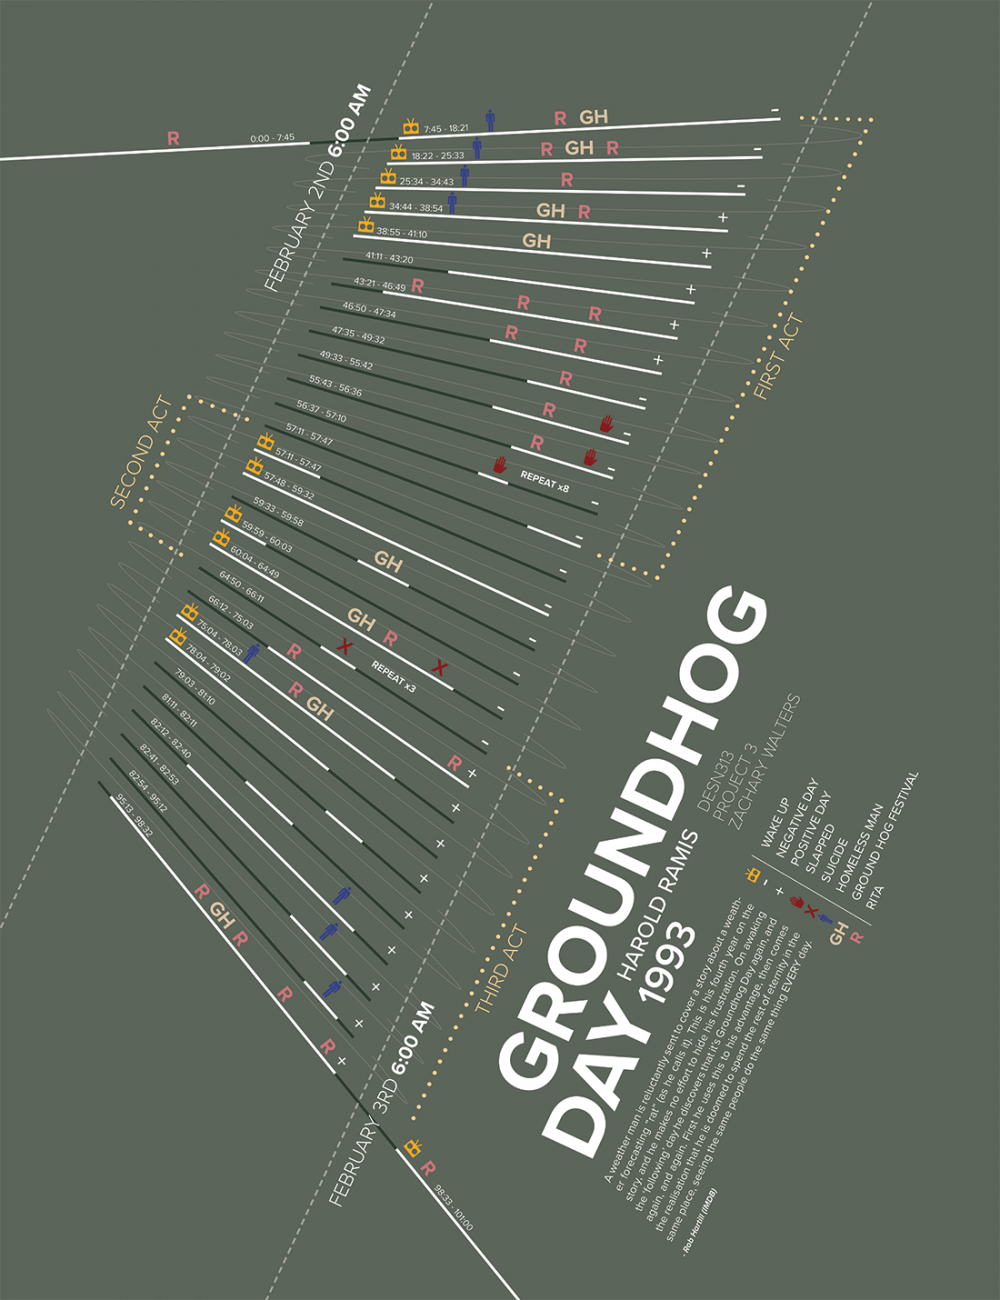 Groundhog Day Time Based Infographic 1